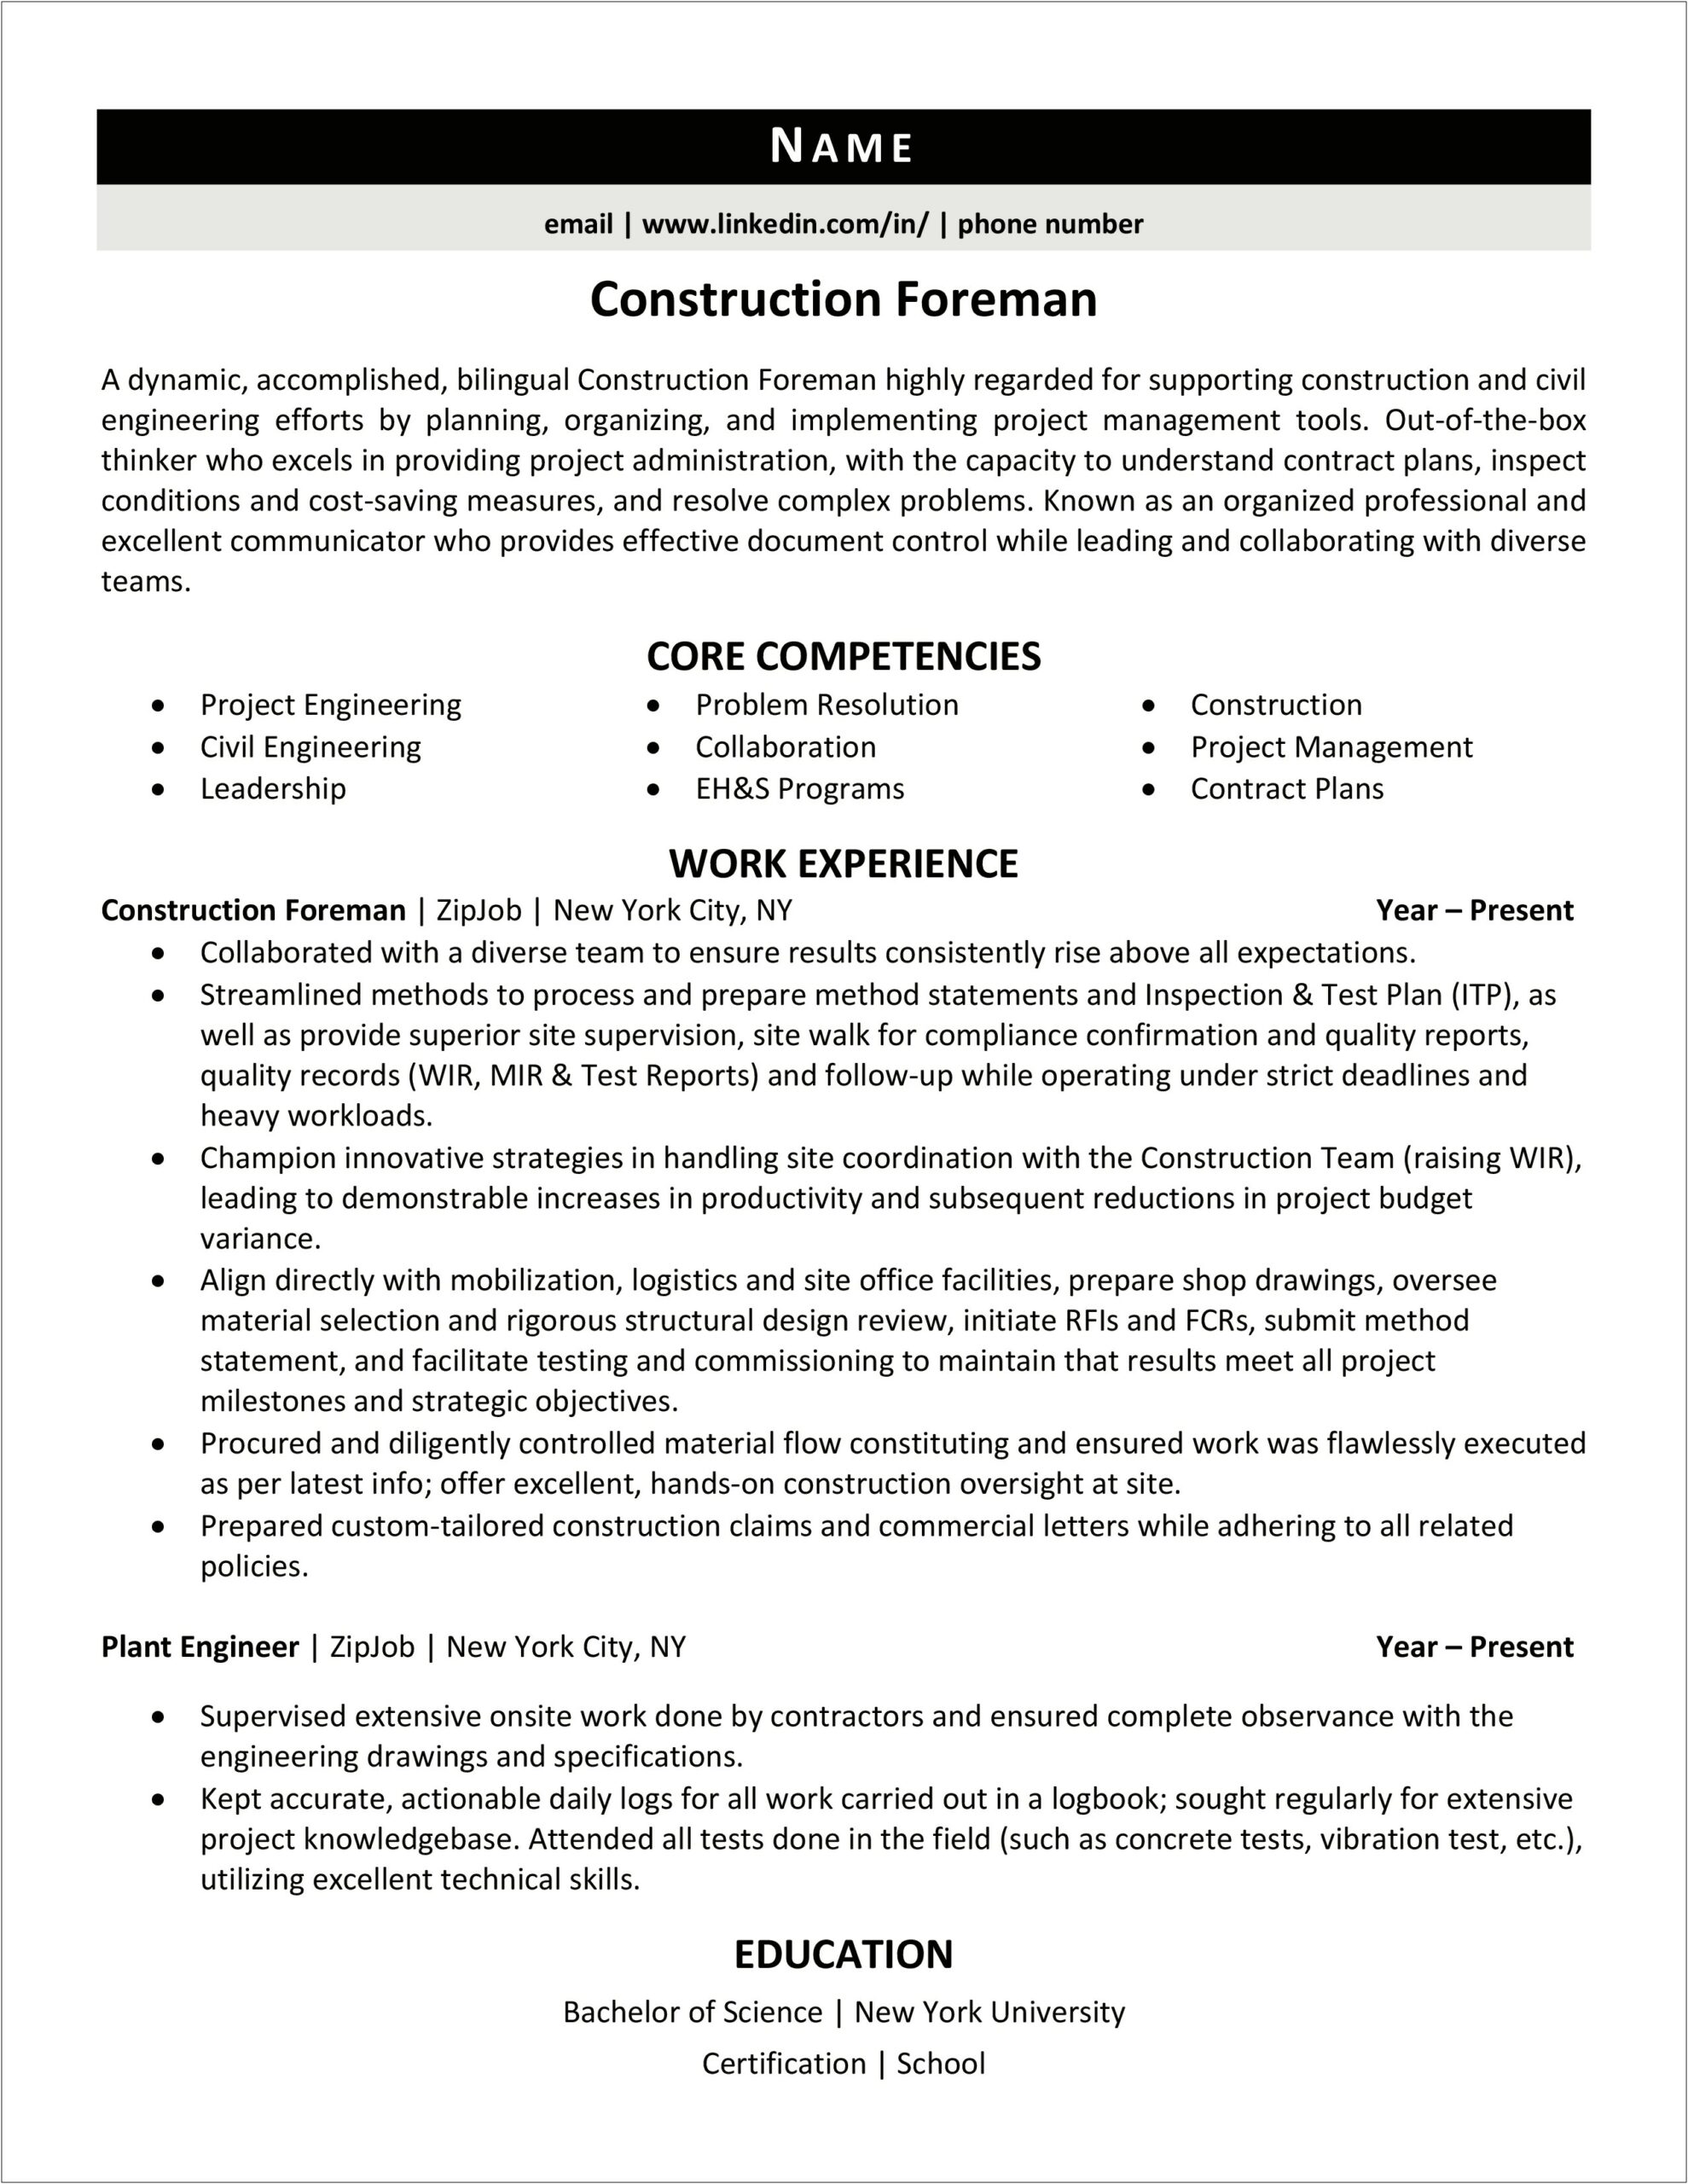 Resume Examples For Construction Job Descriptions